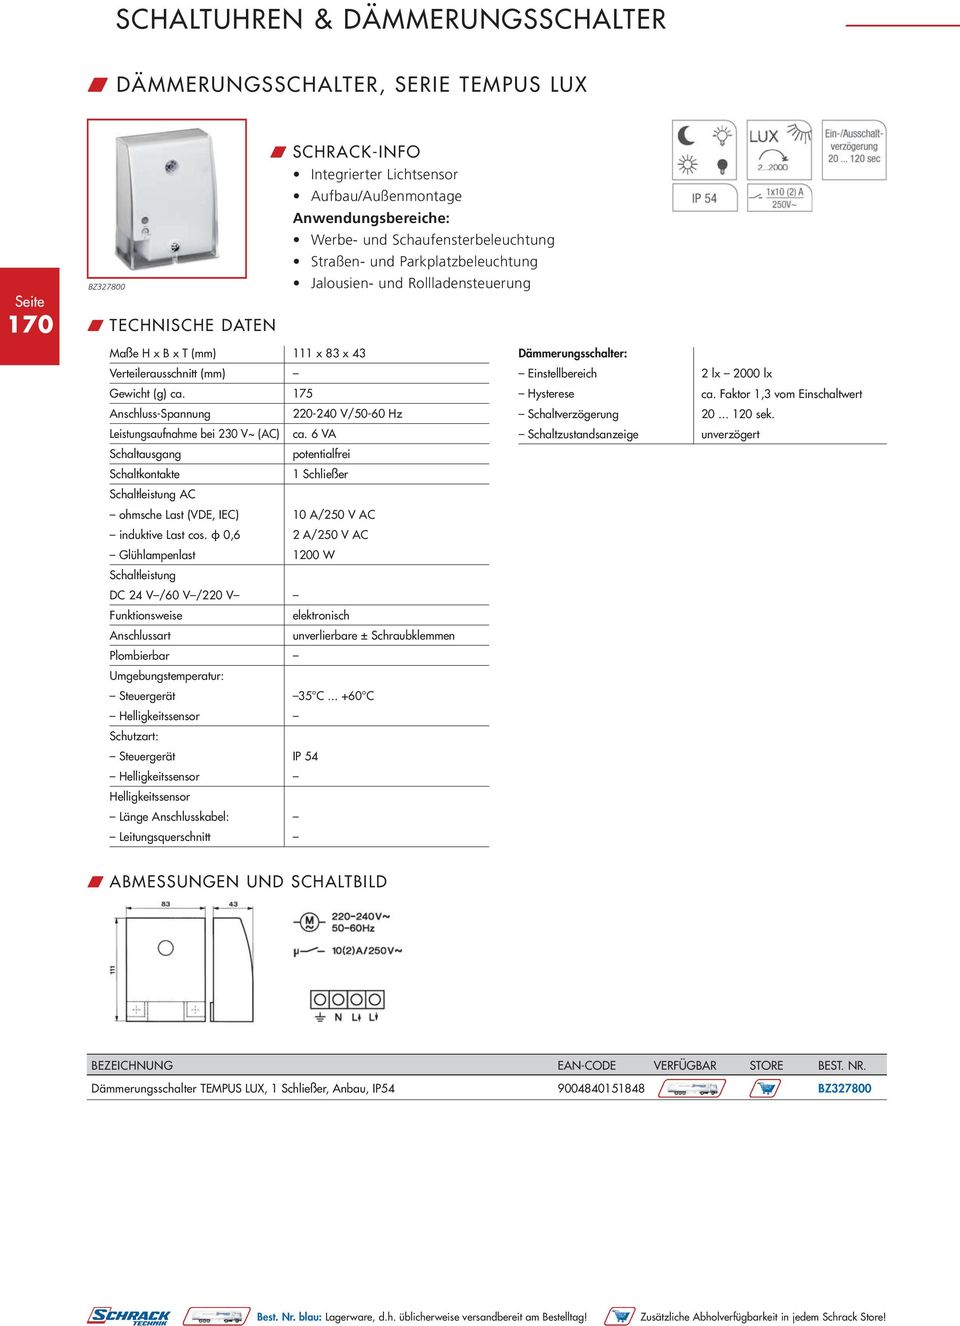 6 VA Schaltzustandsanzeige unverzögert 1 Schließer ohmsche Last (VDE, IEC) 10 A/250 V AC induktive Last cos.